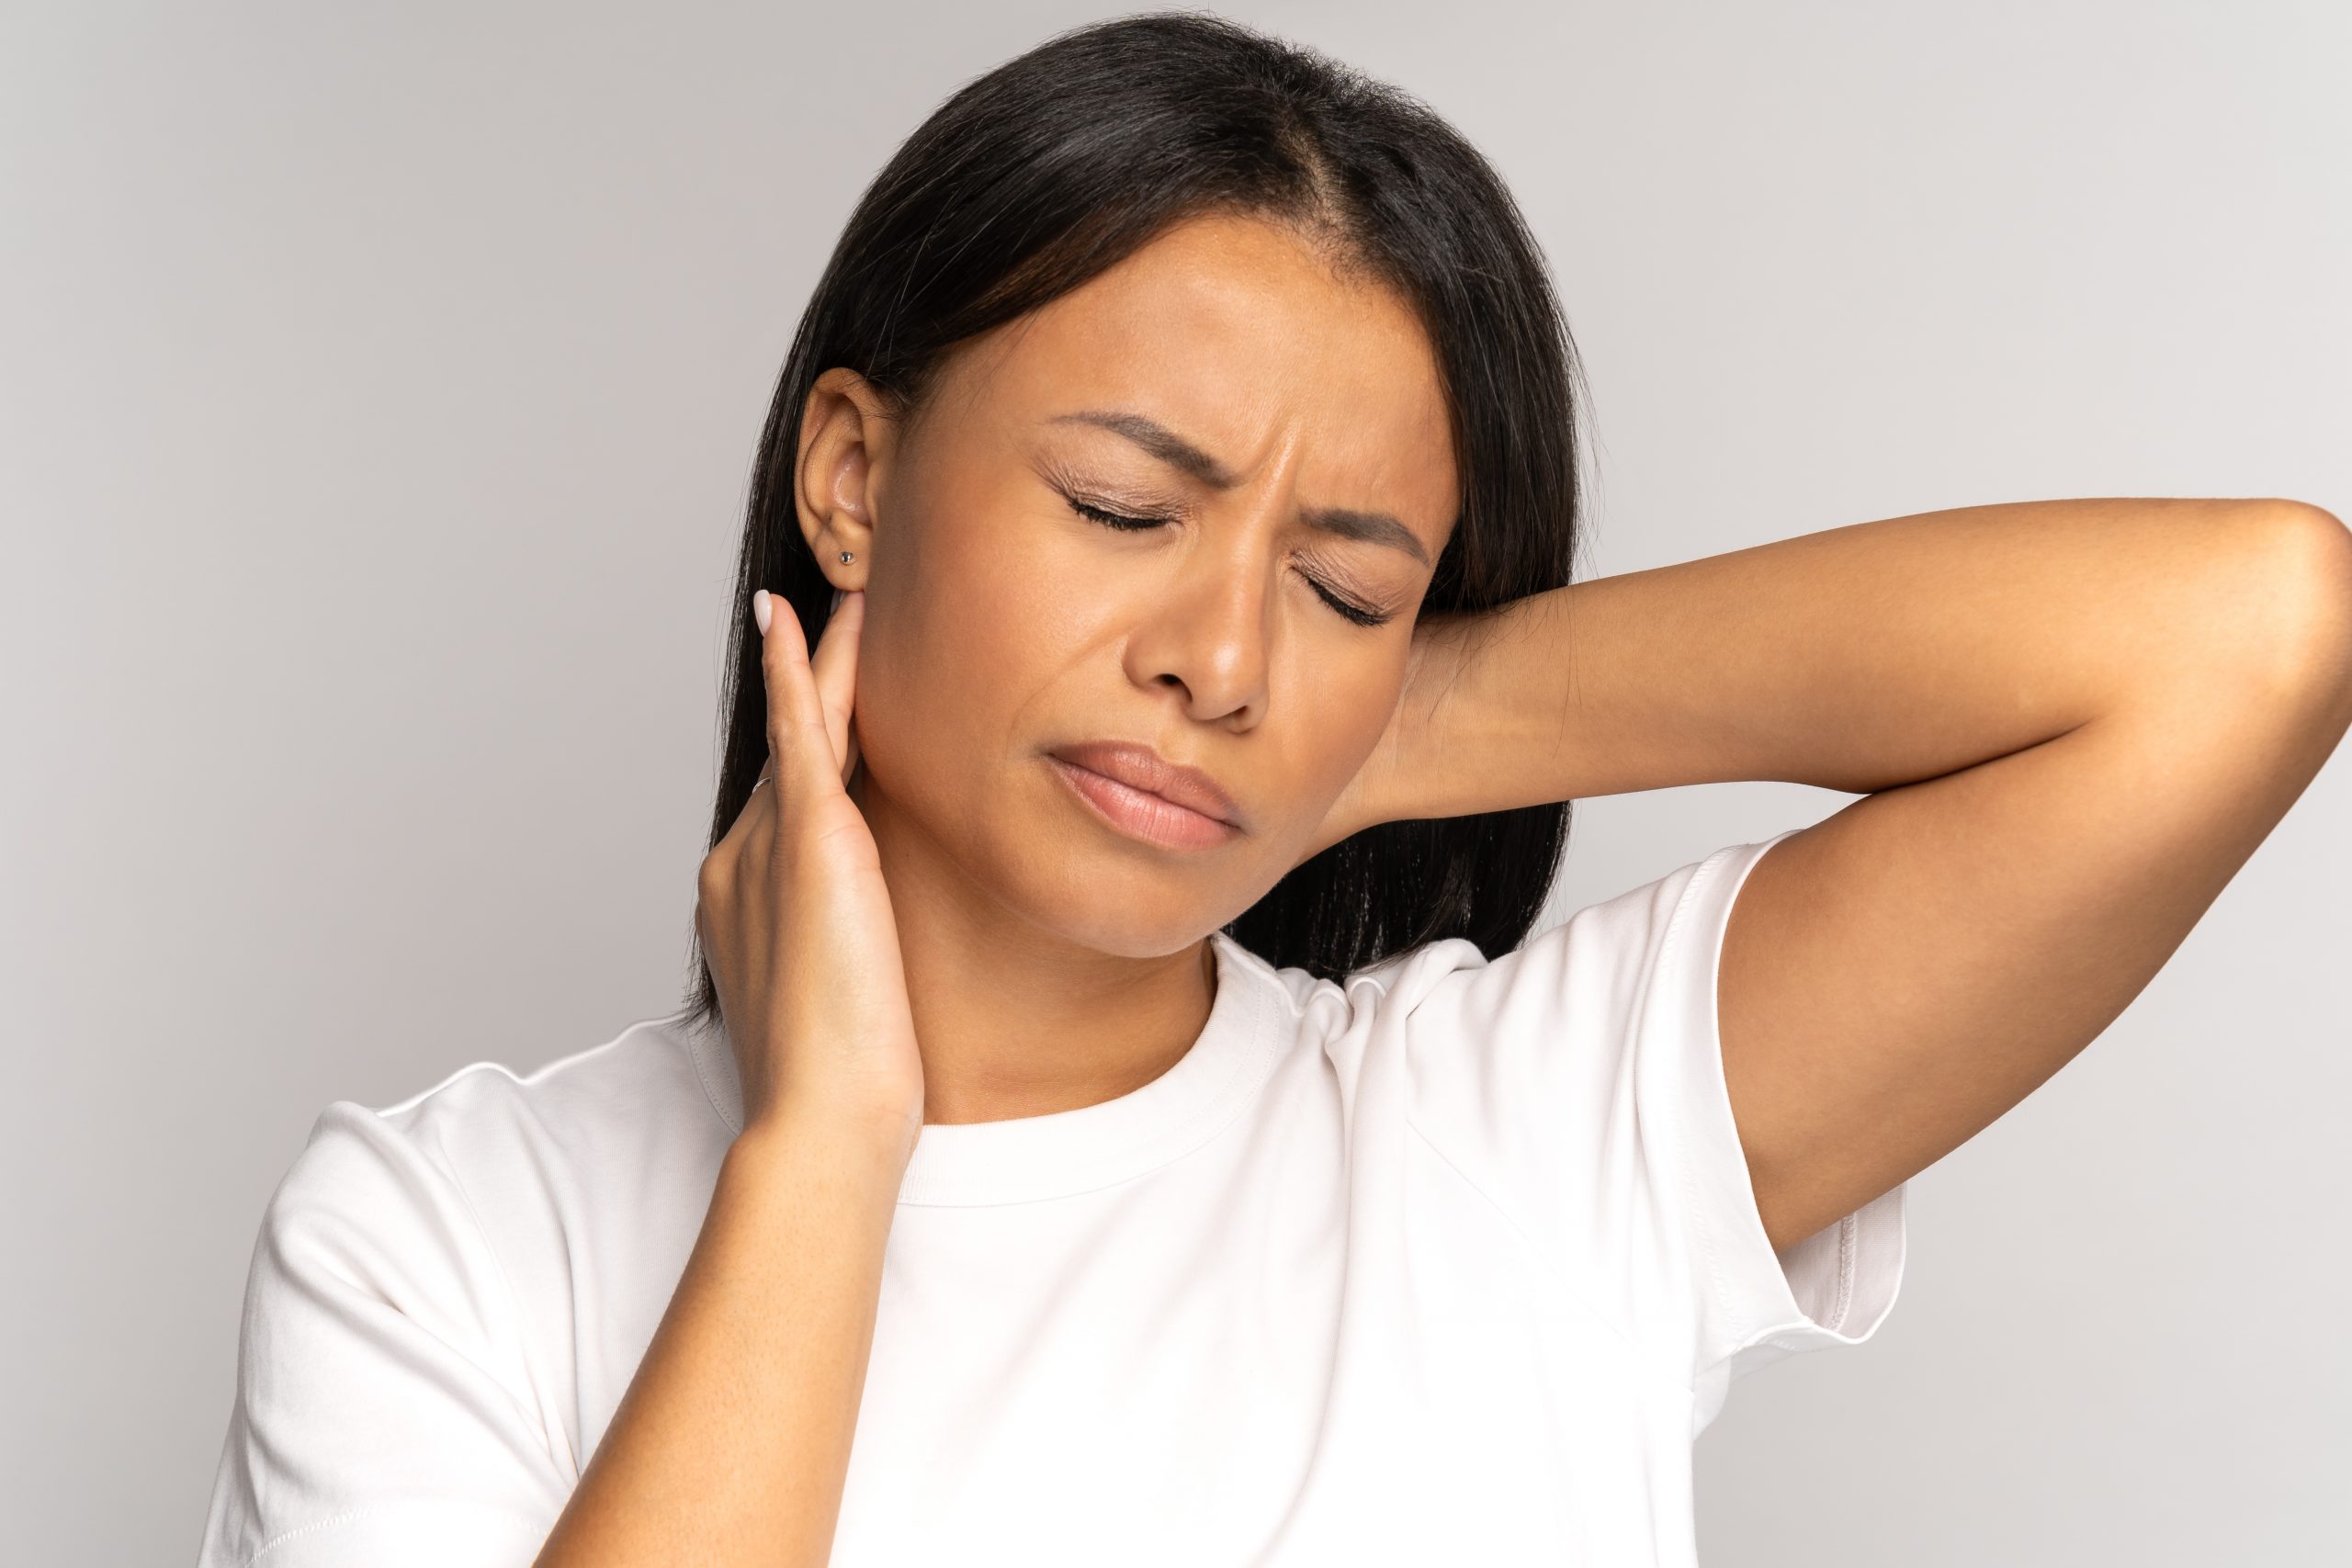 Apple Valley neck pain relief